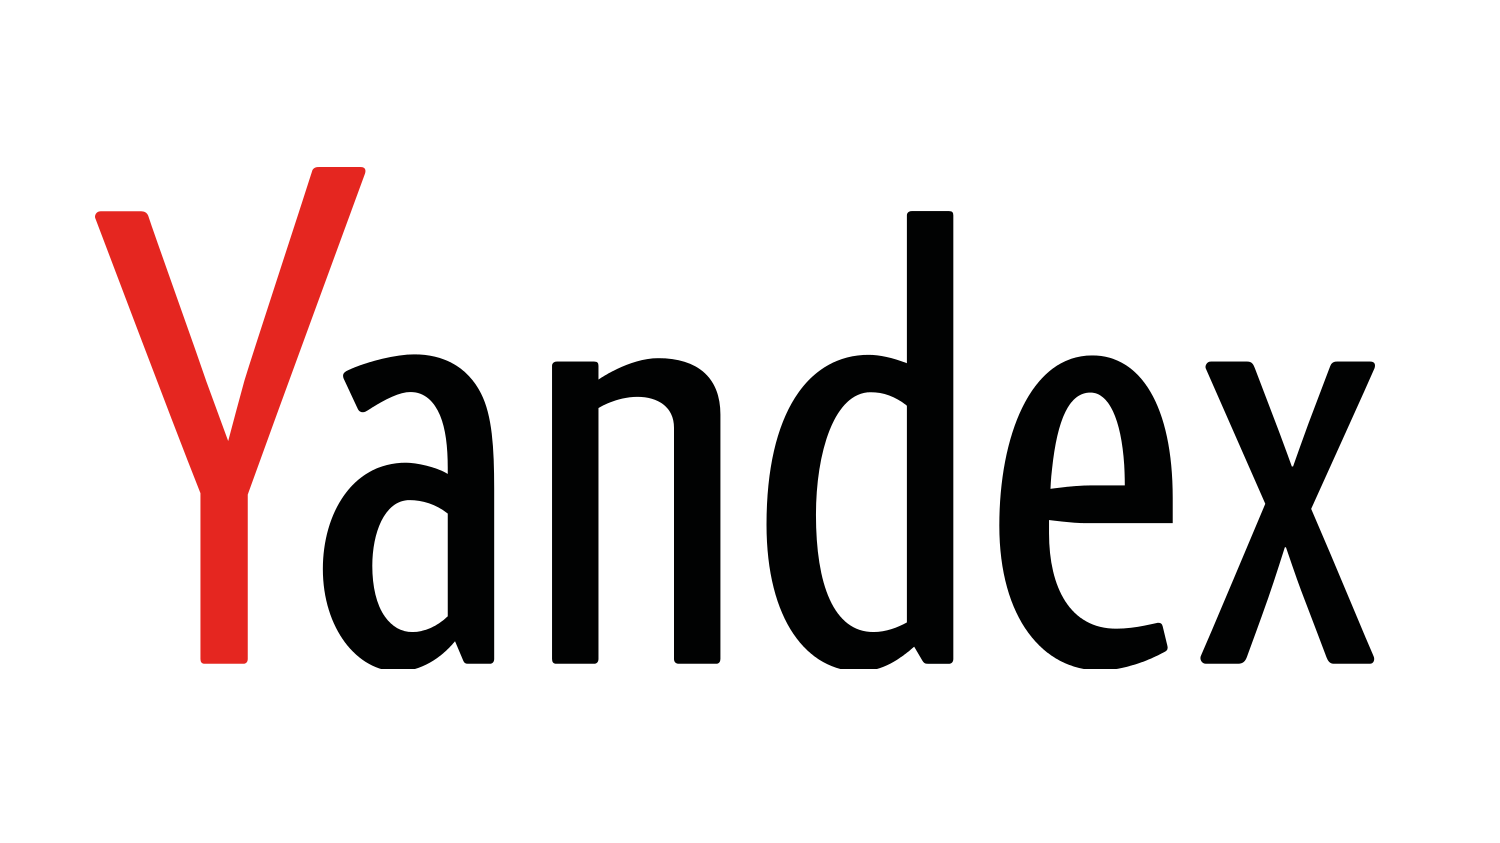 Yandex Logo Download Free PNG